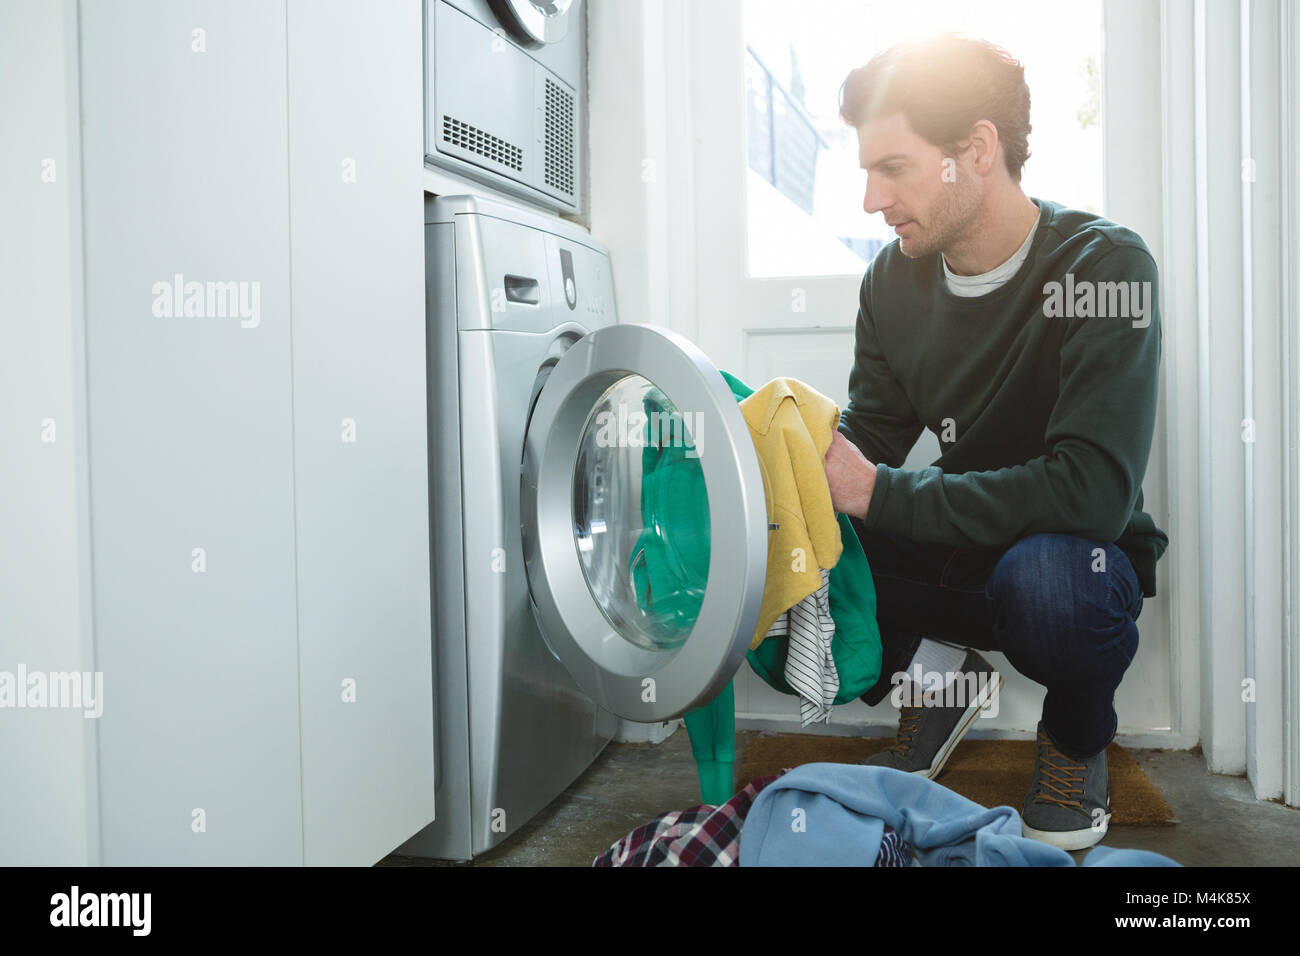 Man putting clothes in washing machine Stock Photo